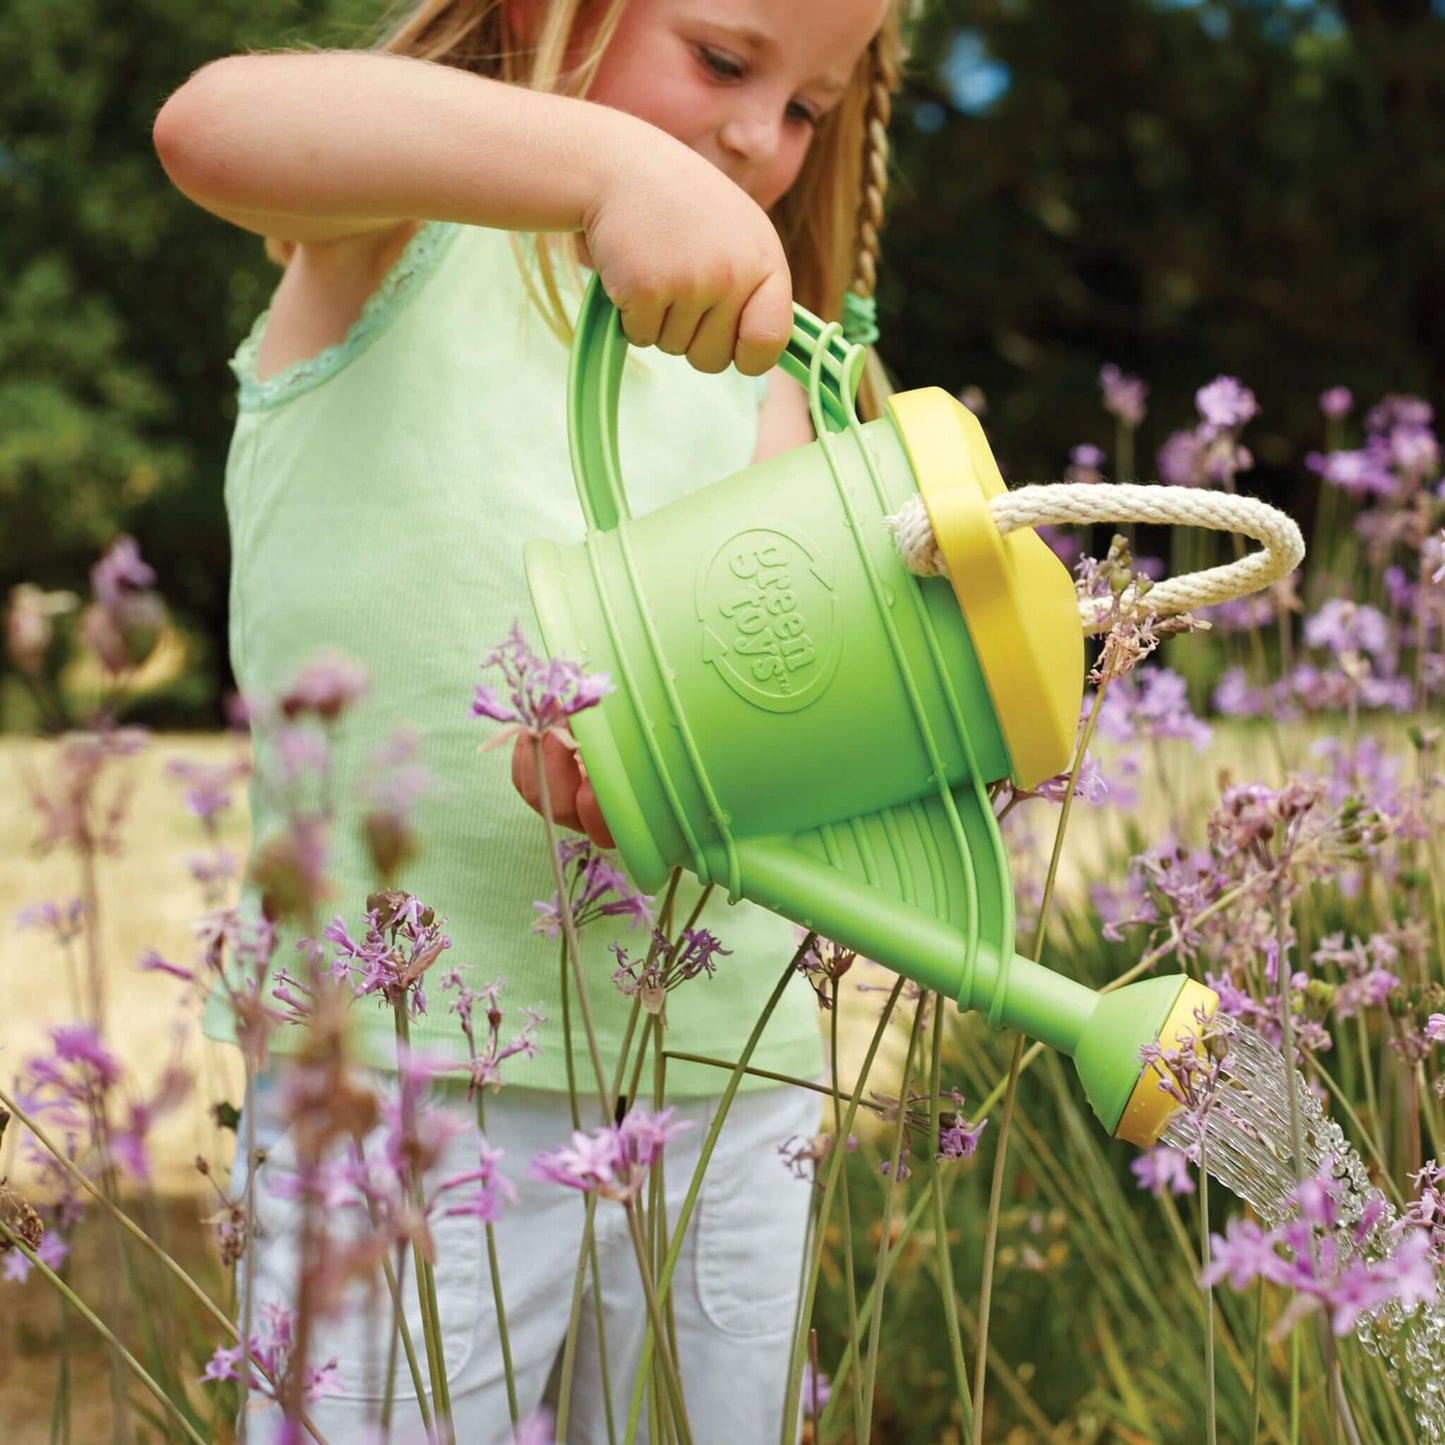 Eco friendly outdoor toys - child waters garden using children's gardening toys